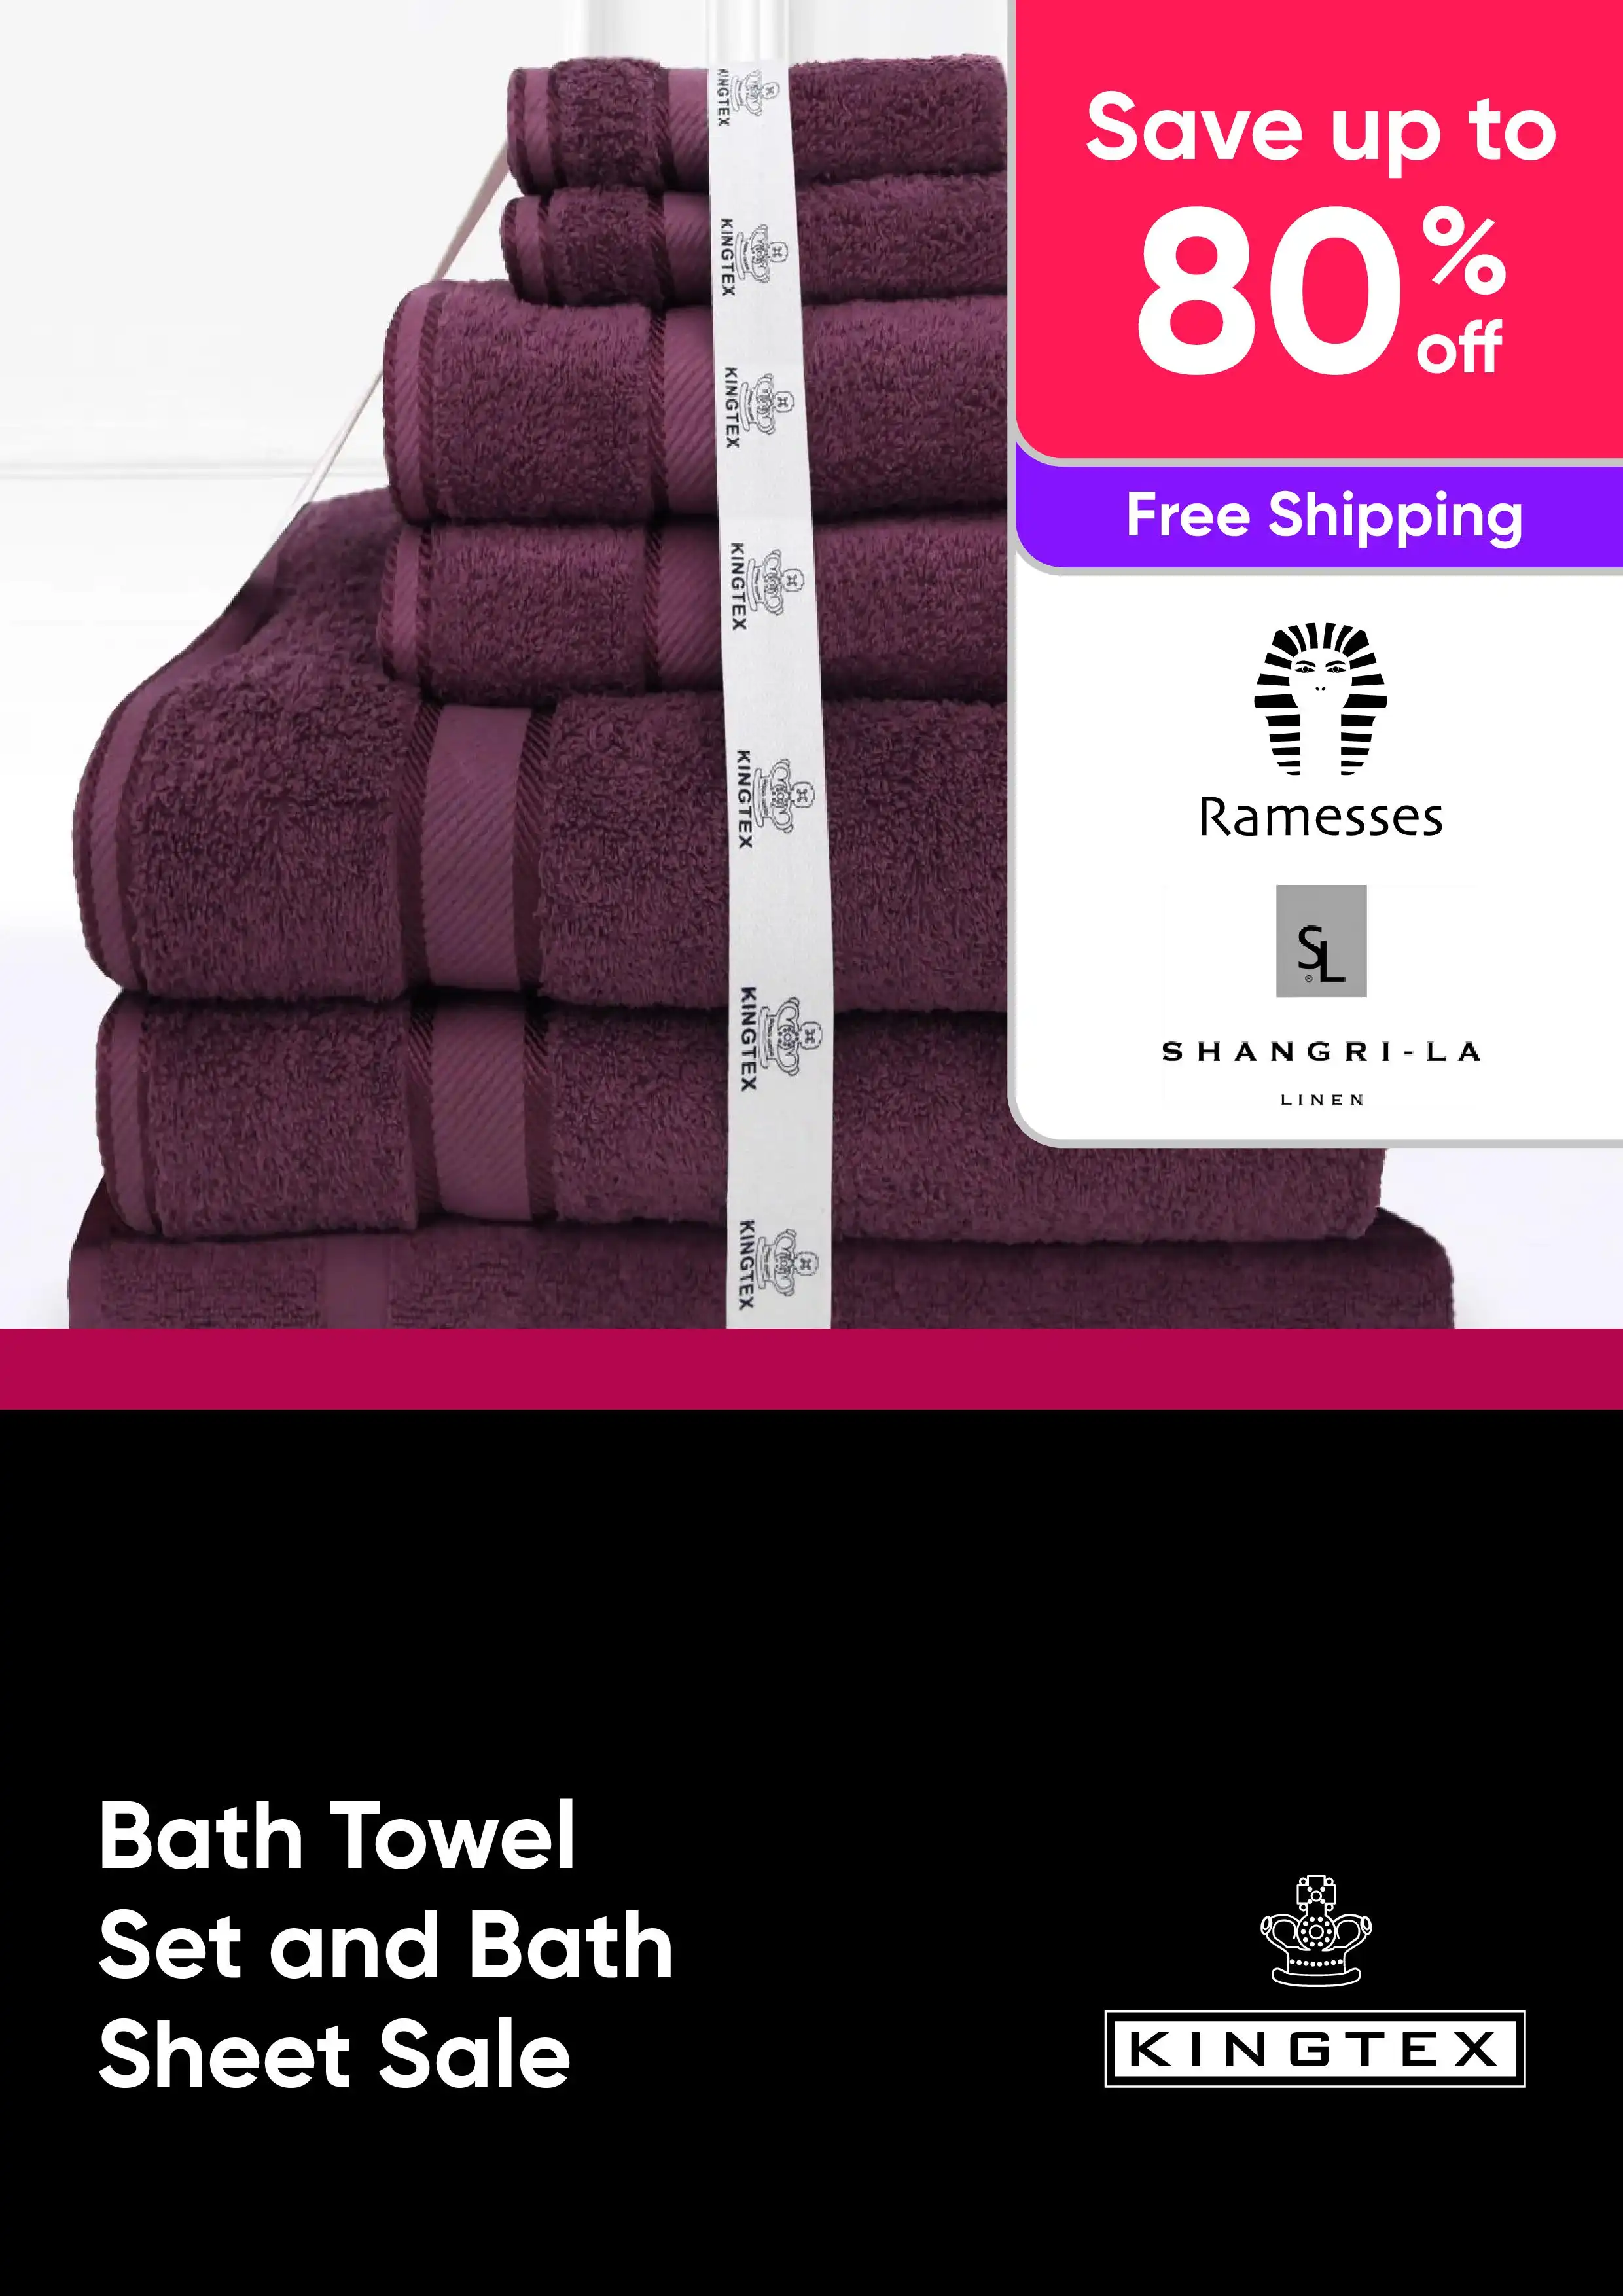 Bath Towel Set and Bath Sheet Sale - Ramesses, Shangir-la - Up to 80% Off